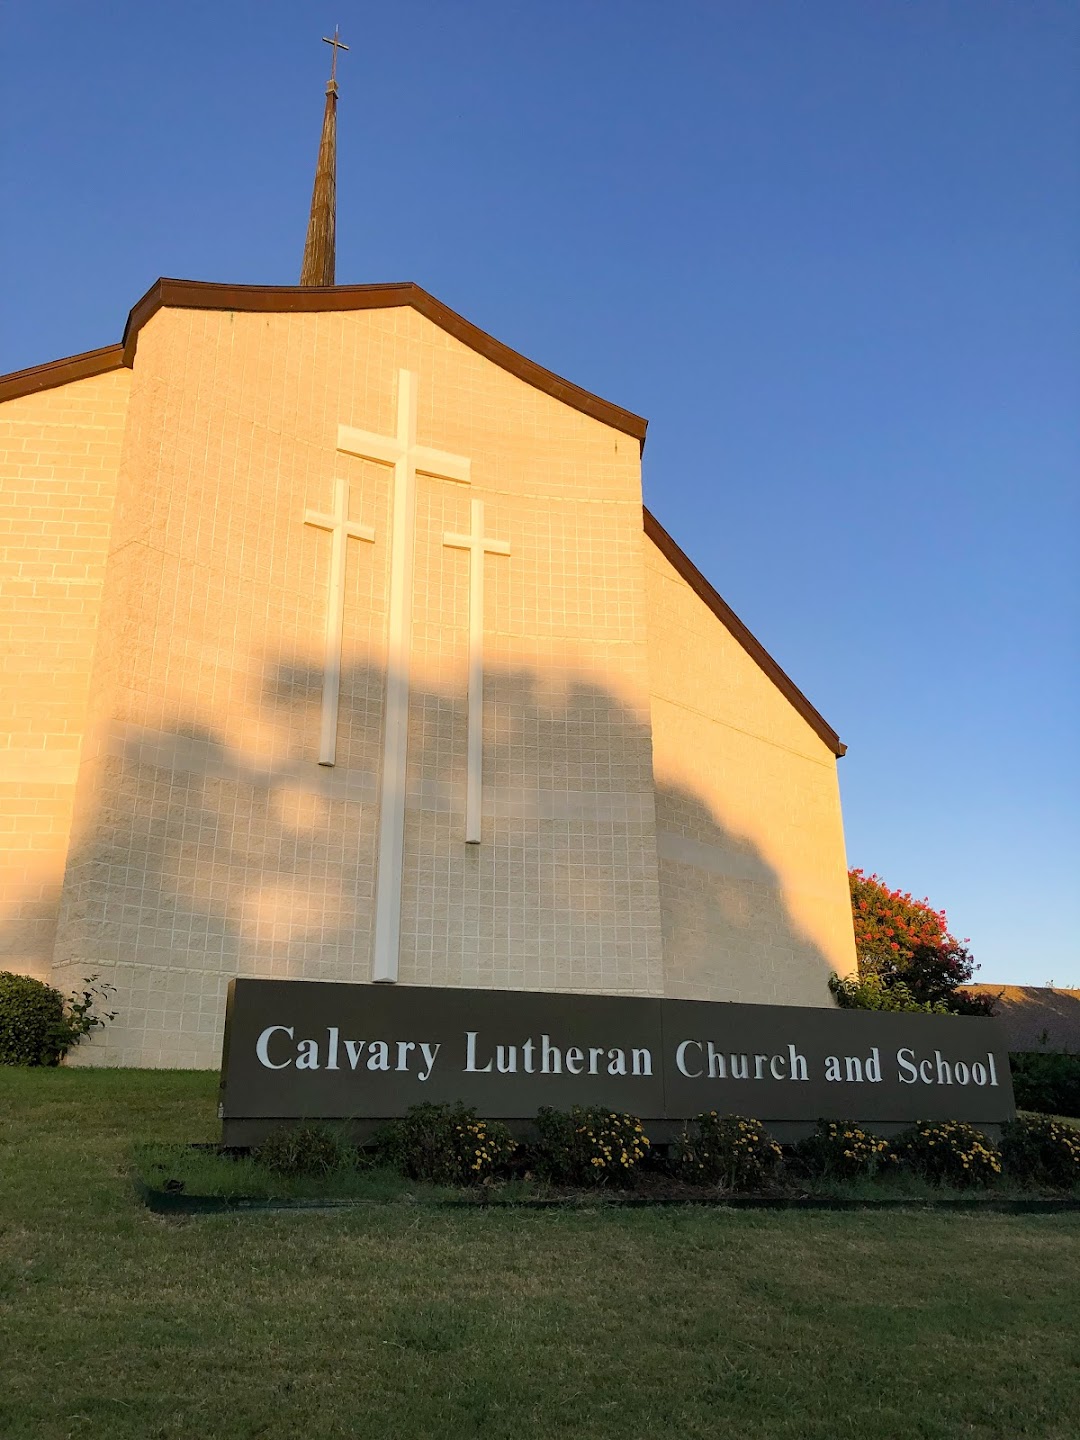 Calvary Lutheran School and church